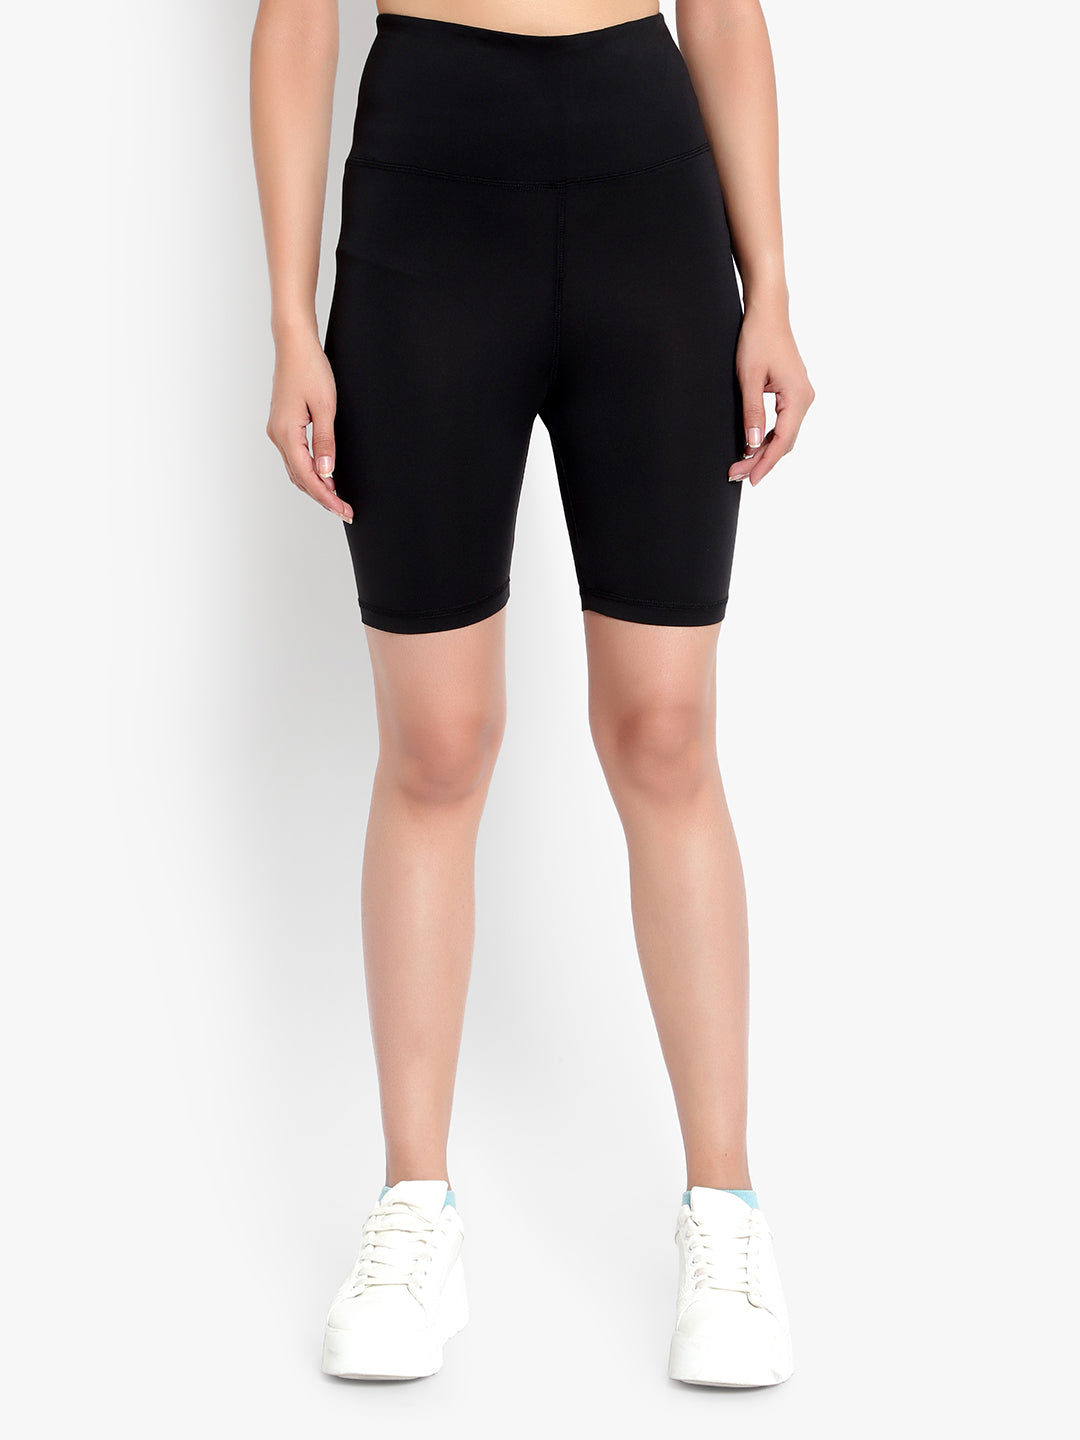 Easy Breezy Shorts - Black